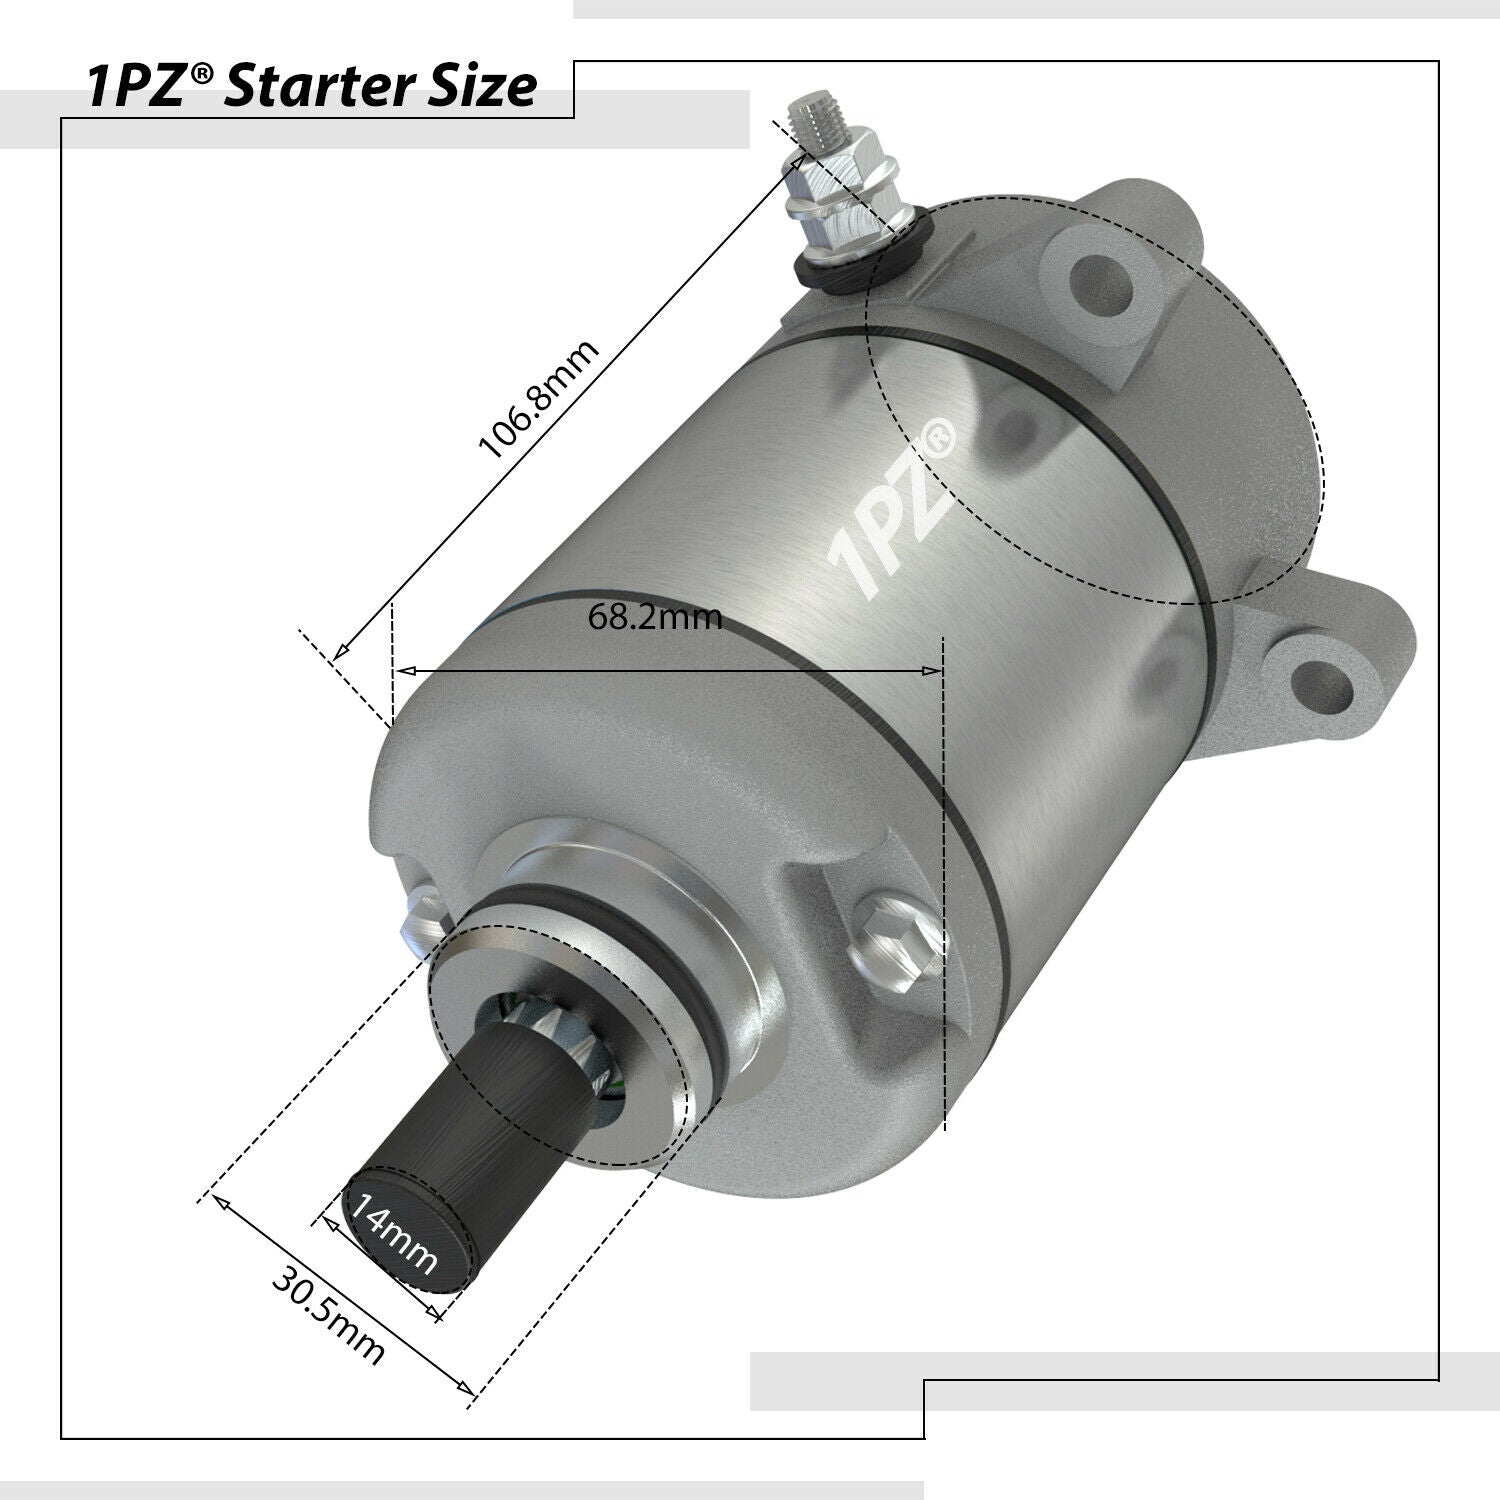 1PZ Starter Motor Replacement for Honda Recon Sportrax 250 TRX250 TRX250EX TRX250TE TRX250TM TRX250X 31200-HM8-003 31200-HM8-A41